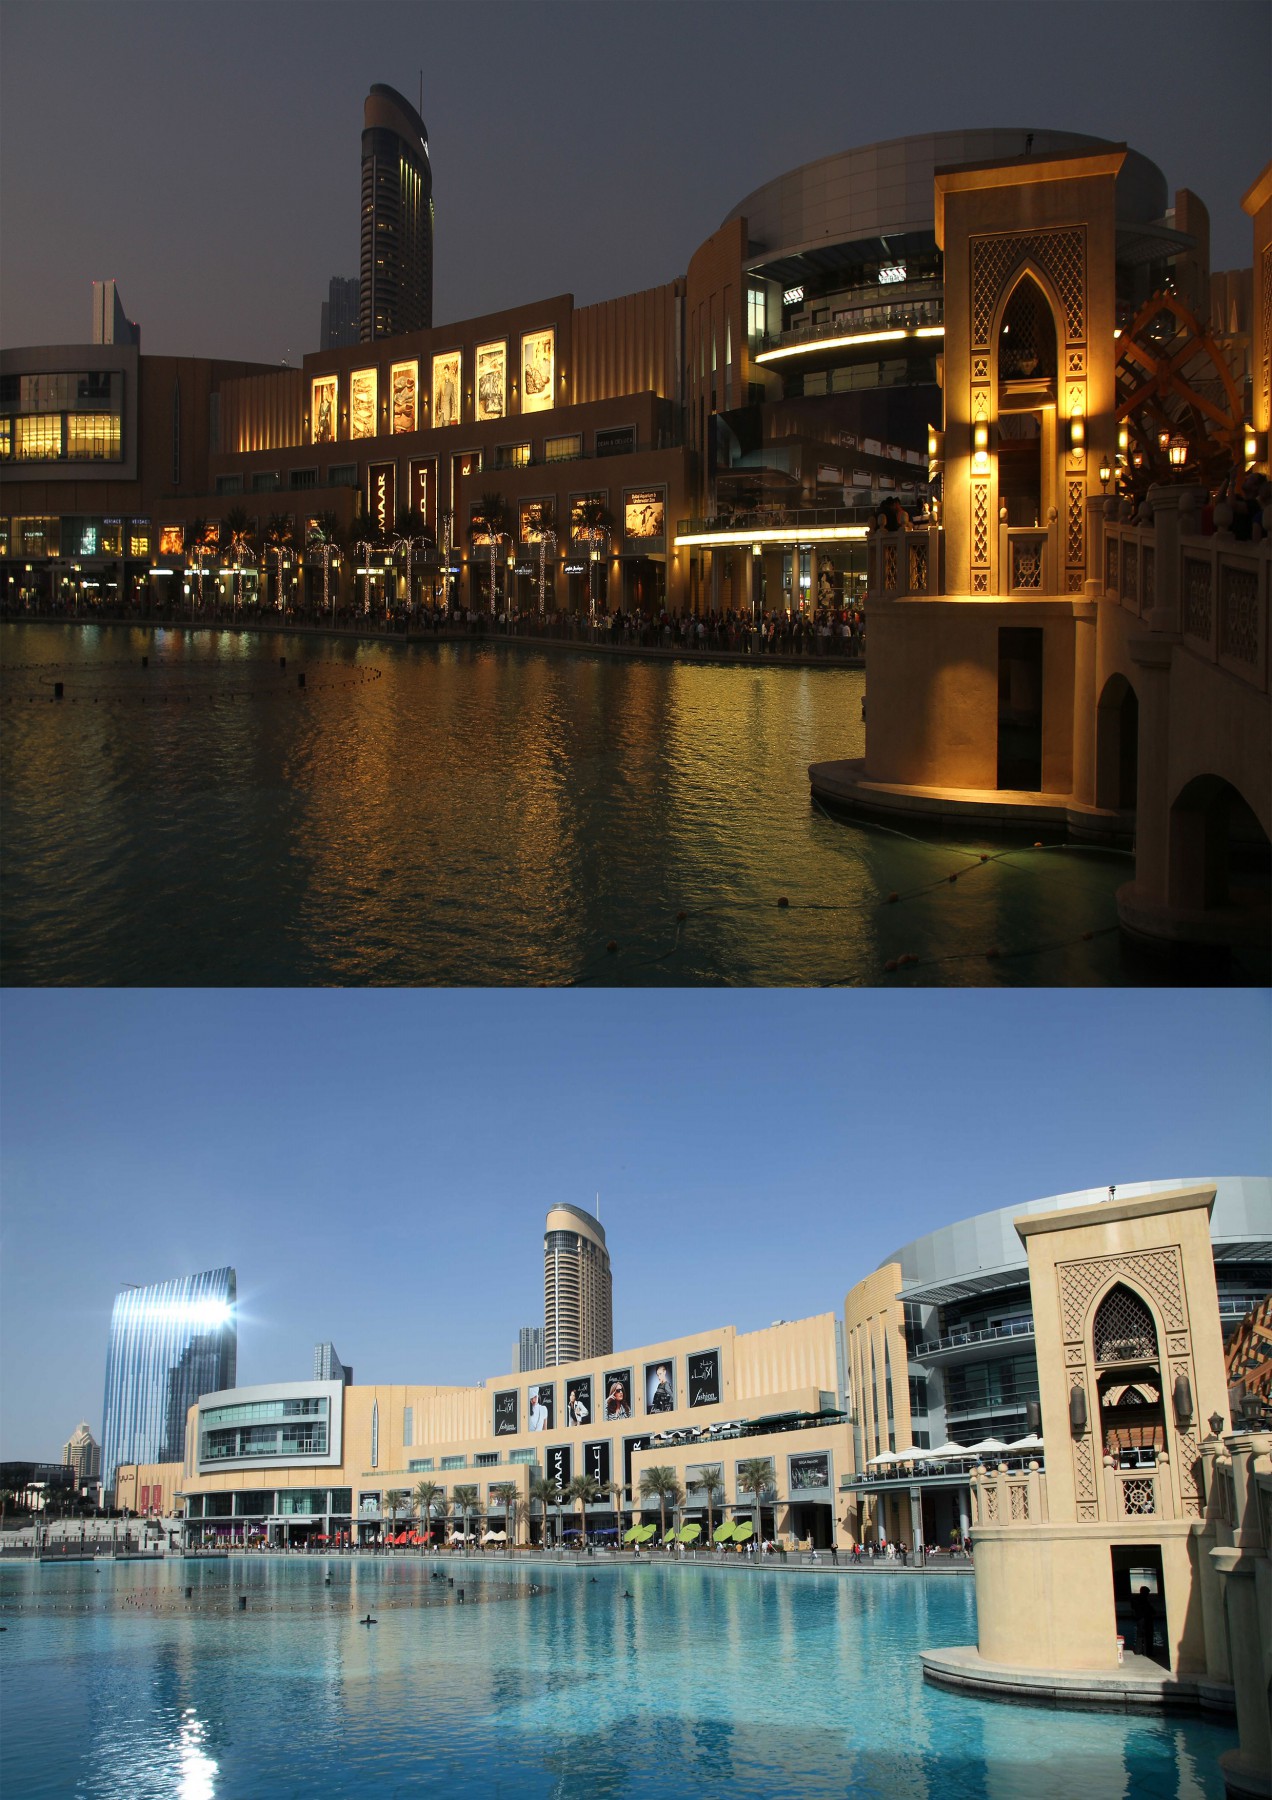 Dubai Mall Fountain Night and Day View The Mall Of Dubai UAE Beautiful Global